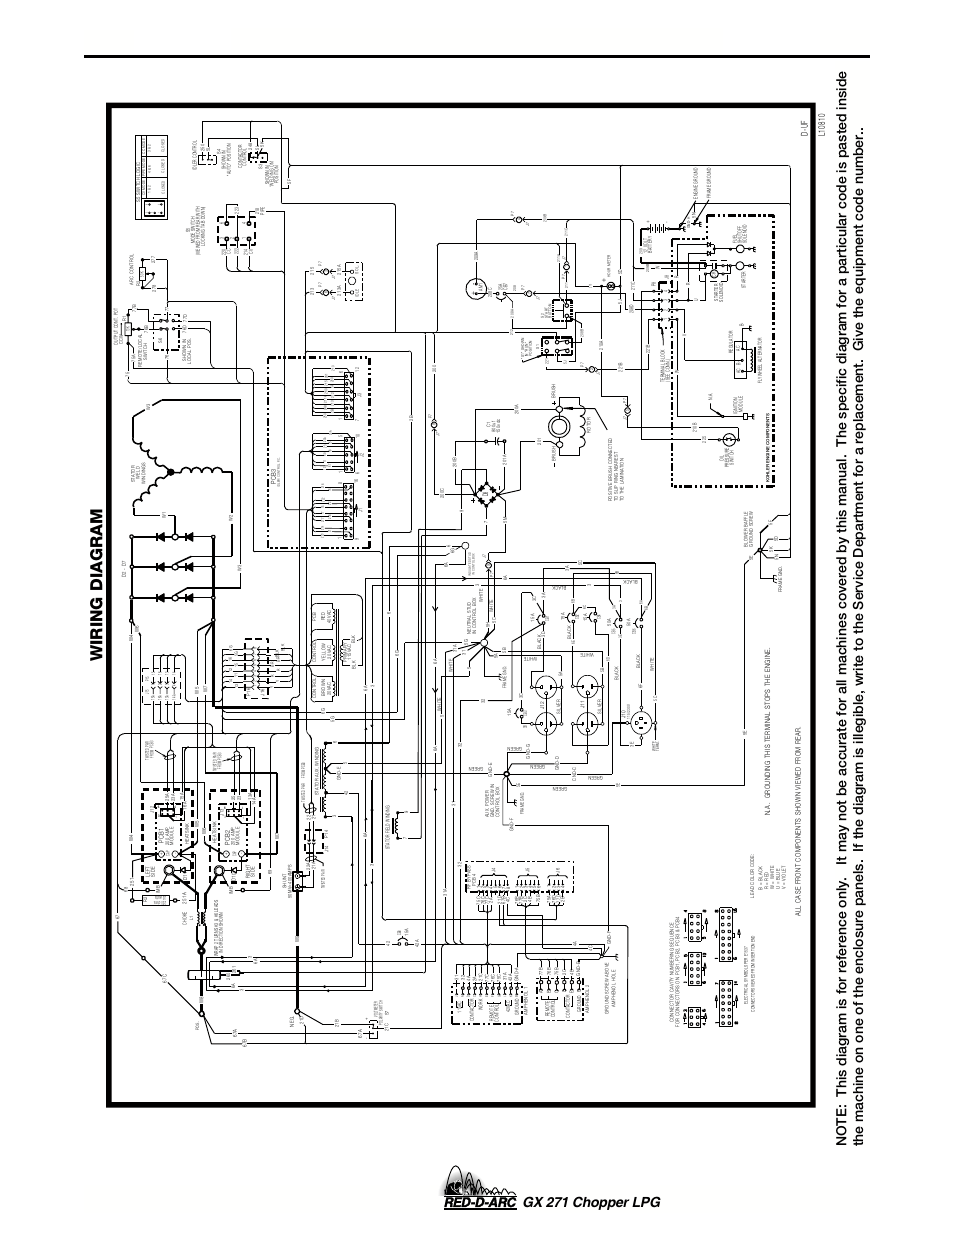 xo vision xod1750 wiring diagram